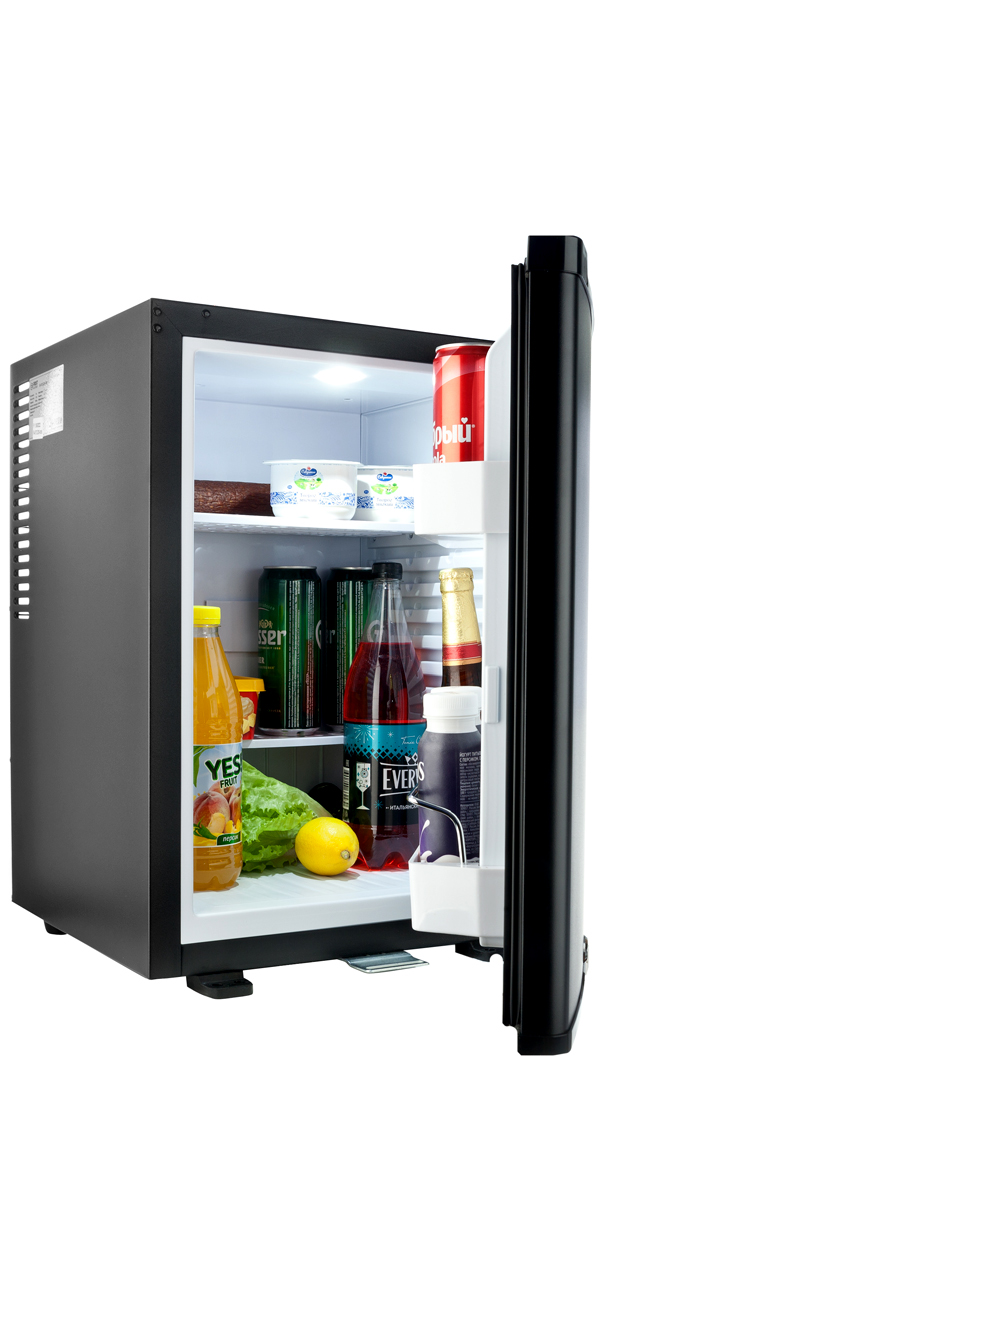 Мини-холодильник FA-5172